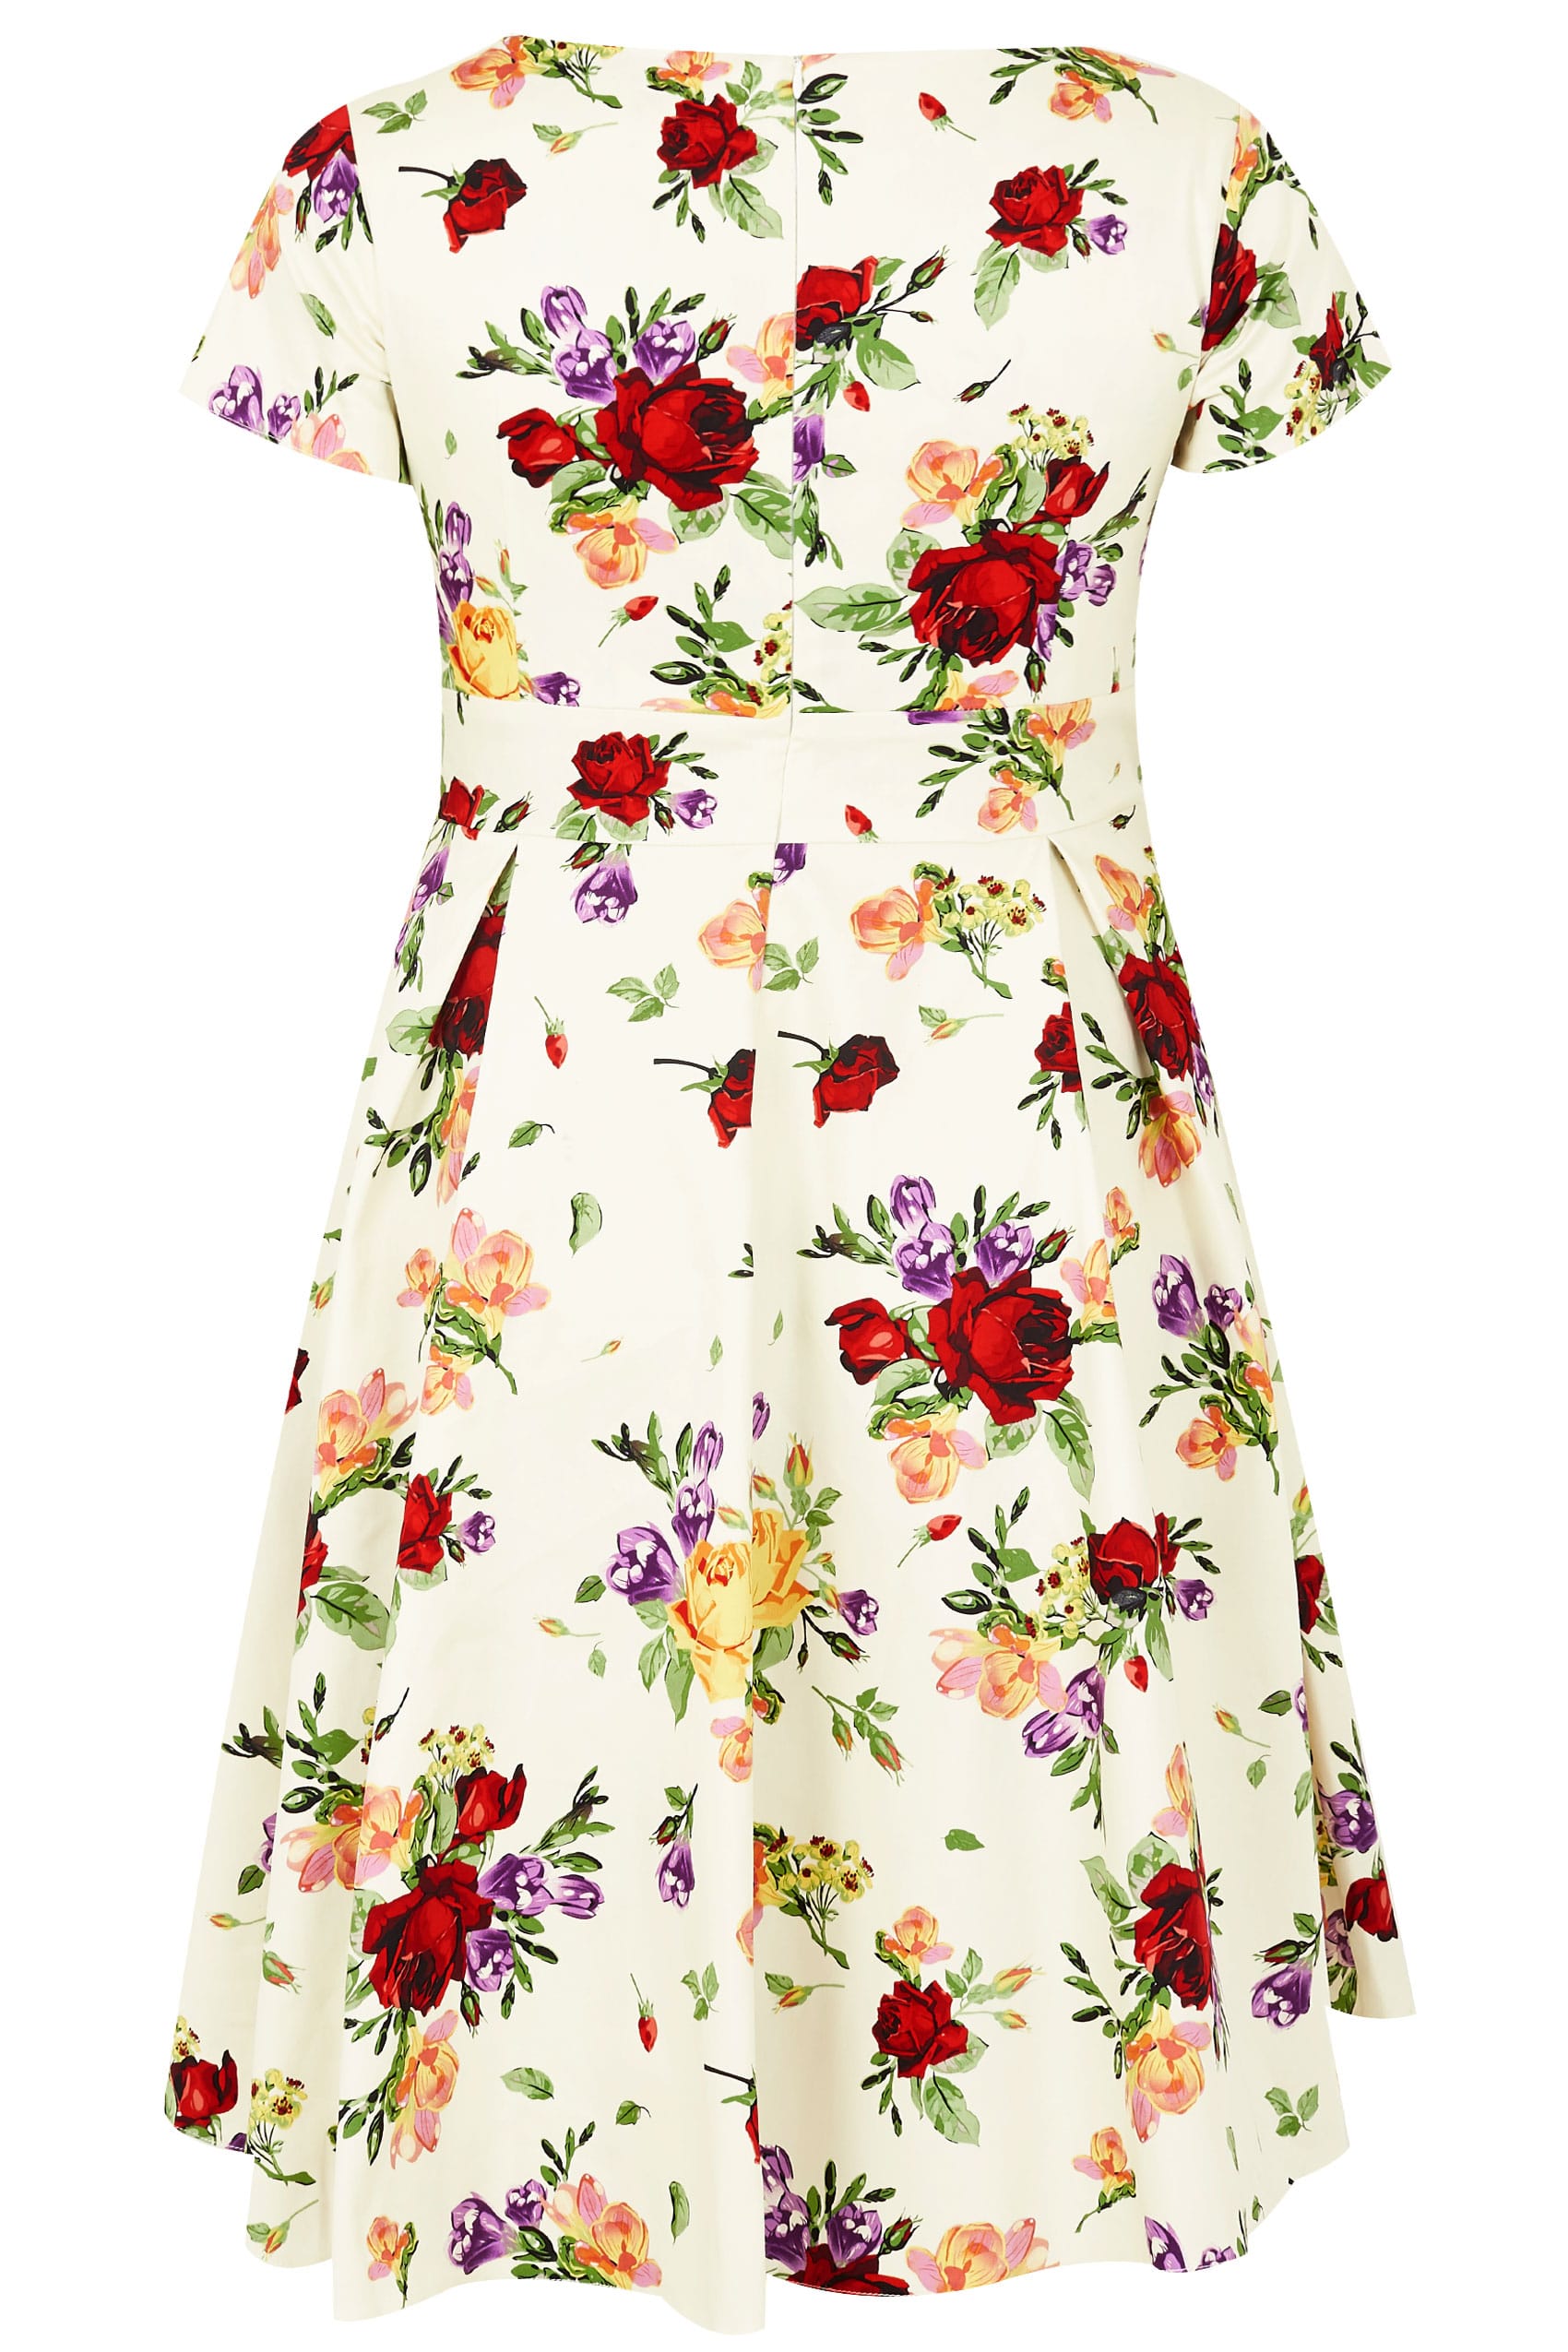 LADY VOLUPTUOUS Cream & Multi Floral Print Ursula Dress, Plus size 16 to 32